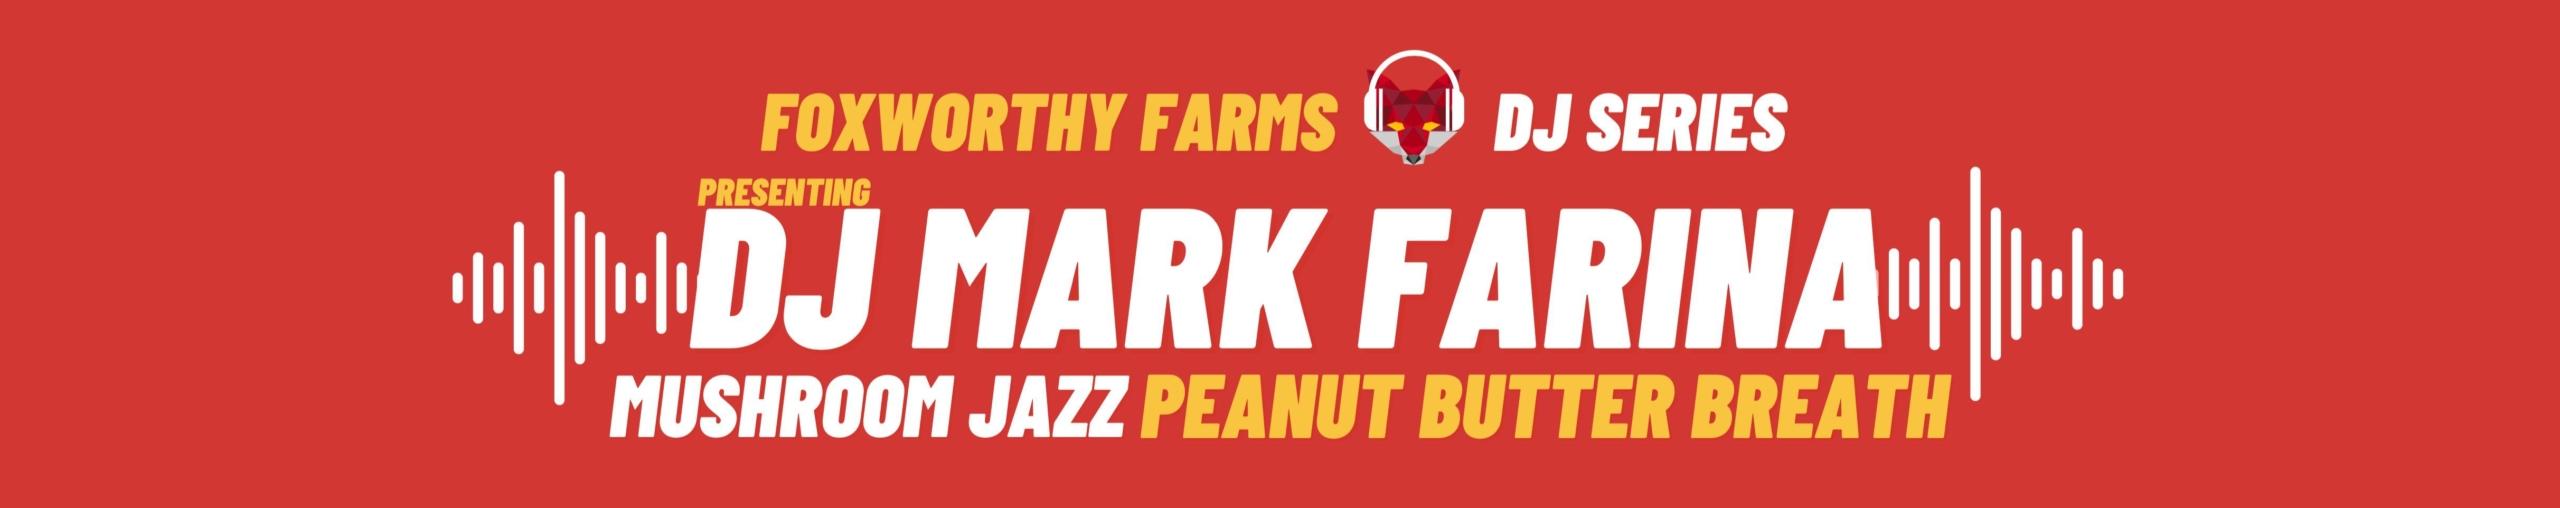 DJ Mark Farina - Peanut Butter Breath - Mushroom Jazz